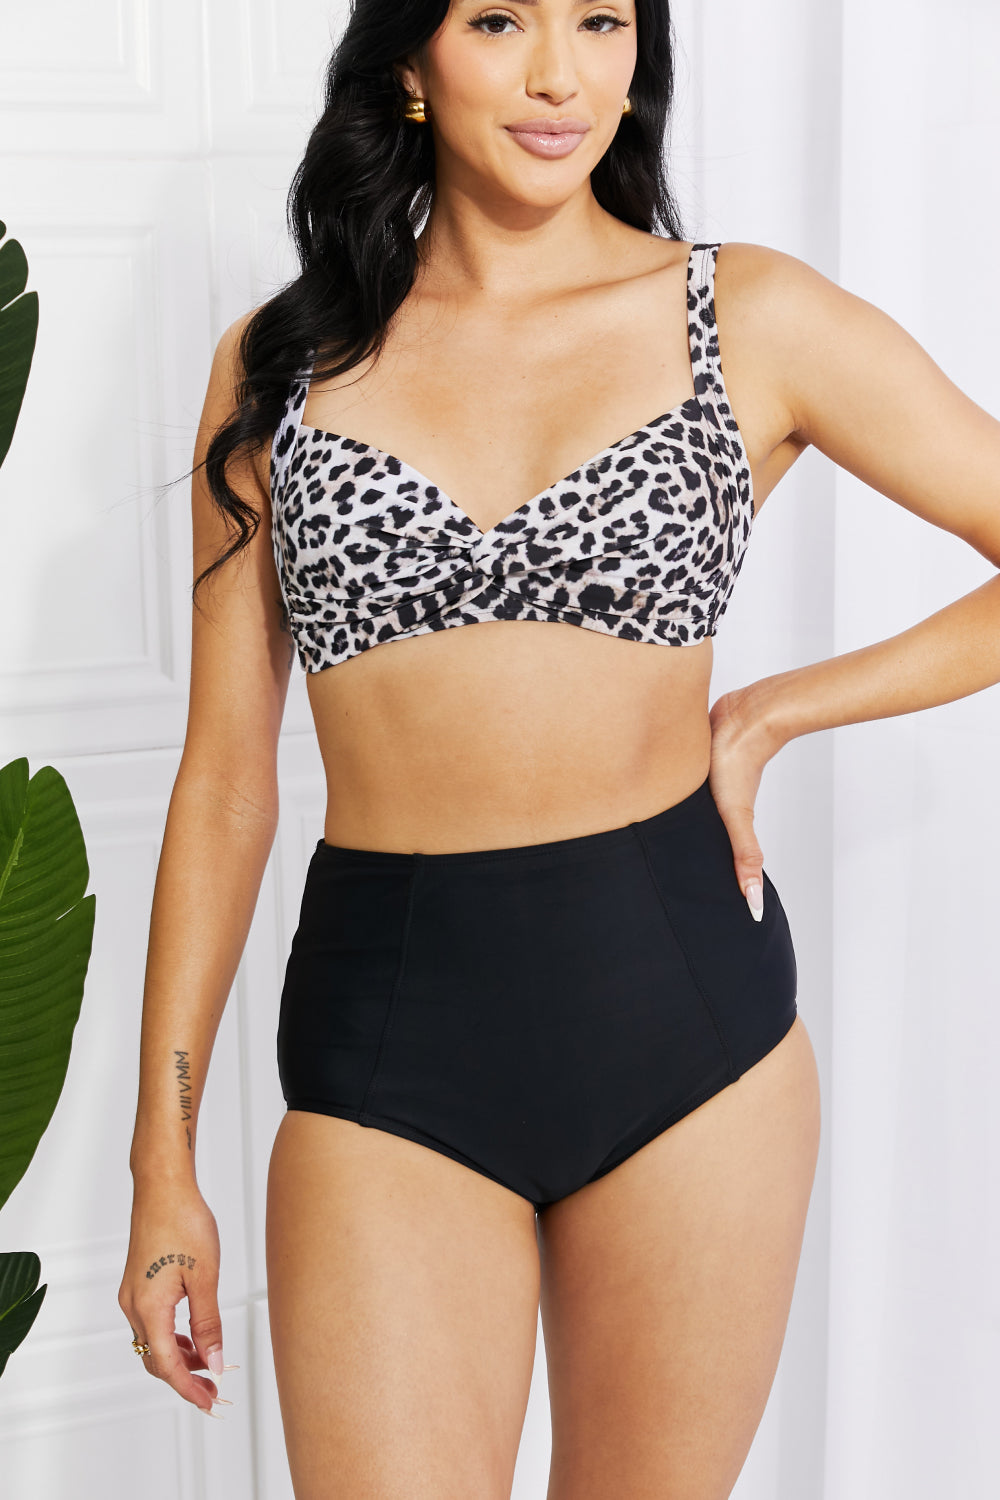 Take A Dip Twist High-Rise Bikini in Leopard - Women’s Clothing & Accessories - Swimwear - 5 - 2024